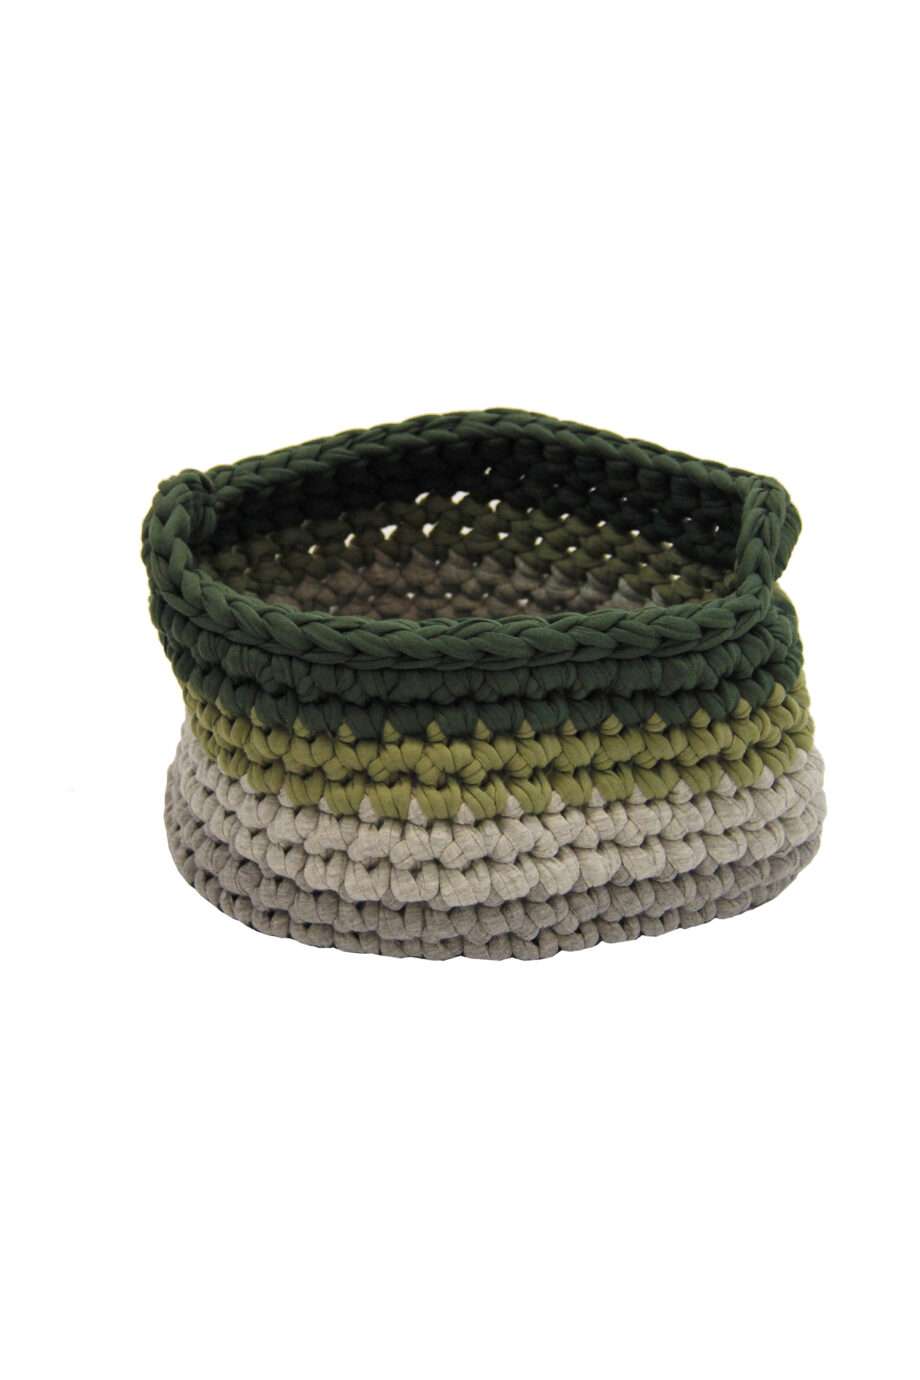 groovy olive green crochet cotton basket xlarge